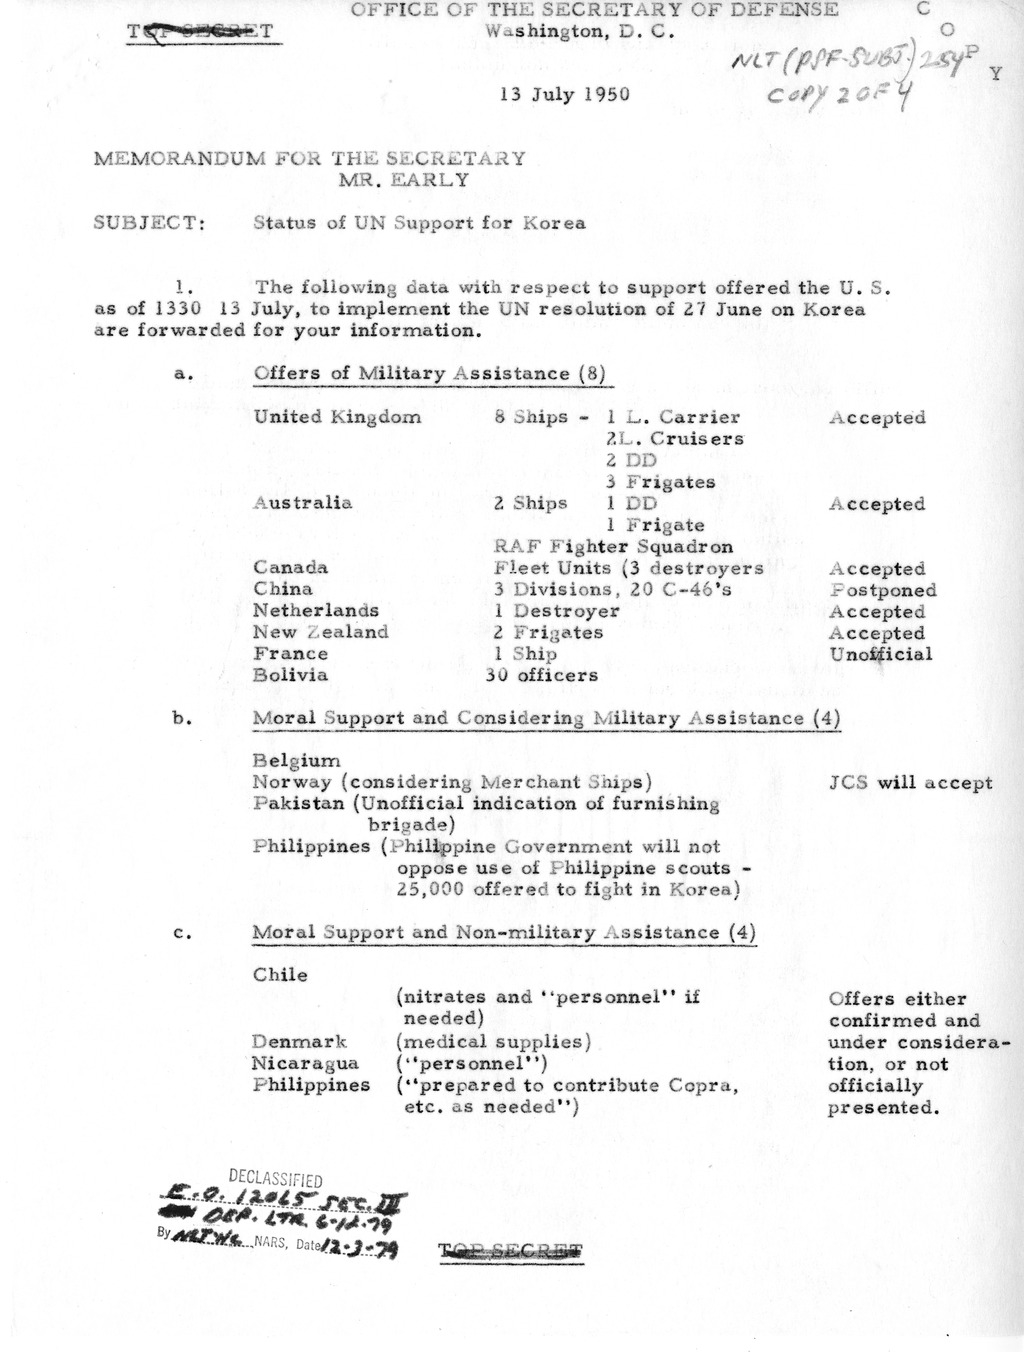 Memorandum from President Harry S. Truman to Secretary of Defense Louis Johnson, with Attachments